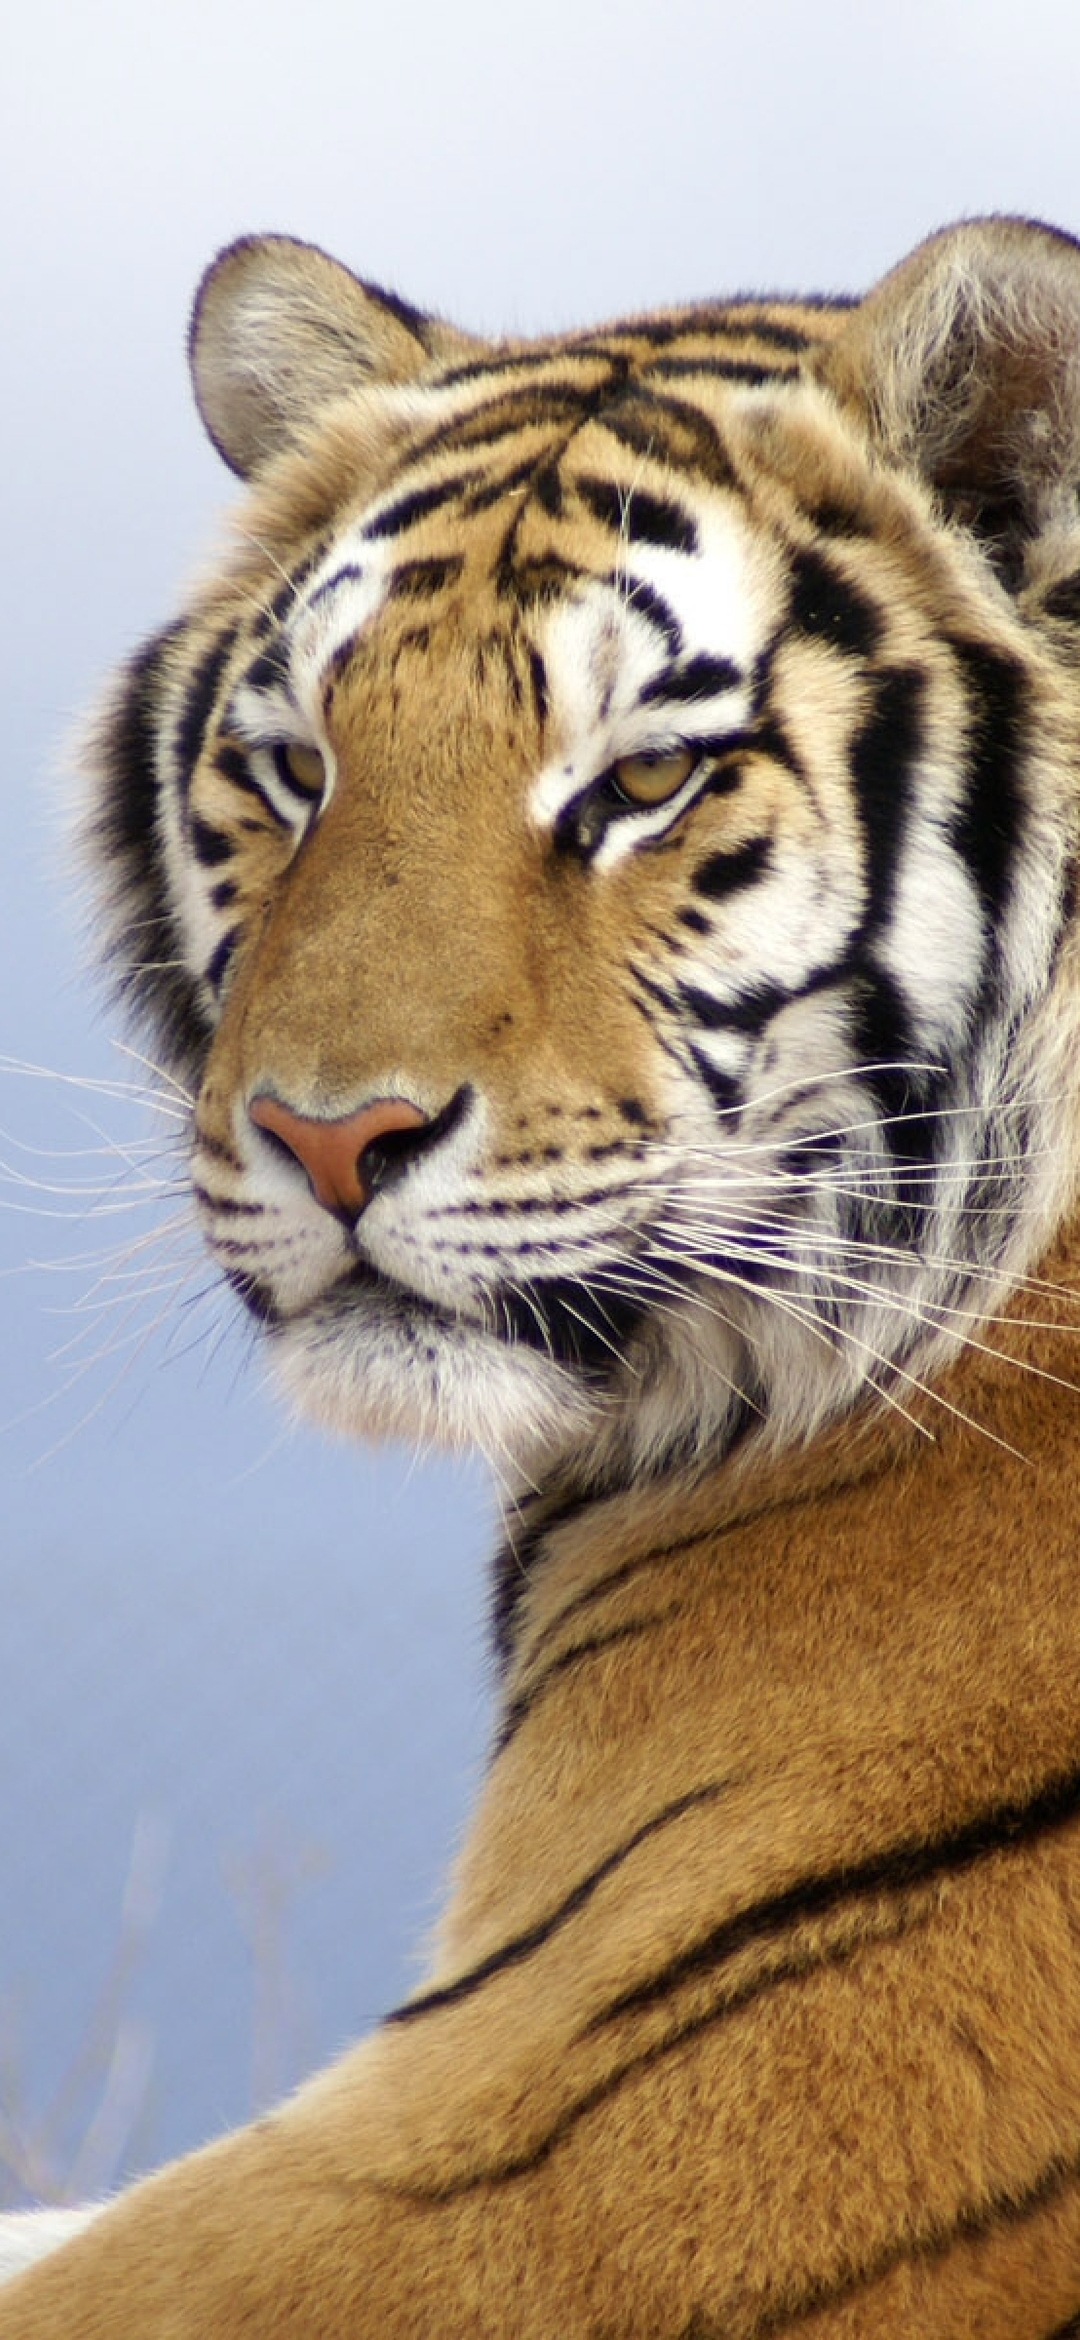 Image: Cat, large, Tiger, striped, Amur, look, predator, muzzle